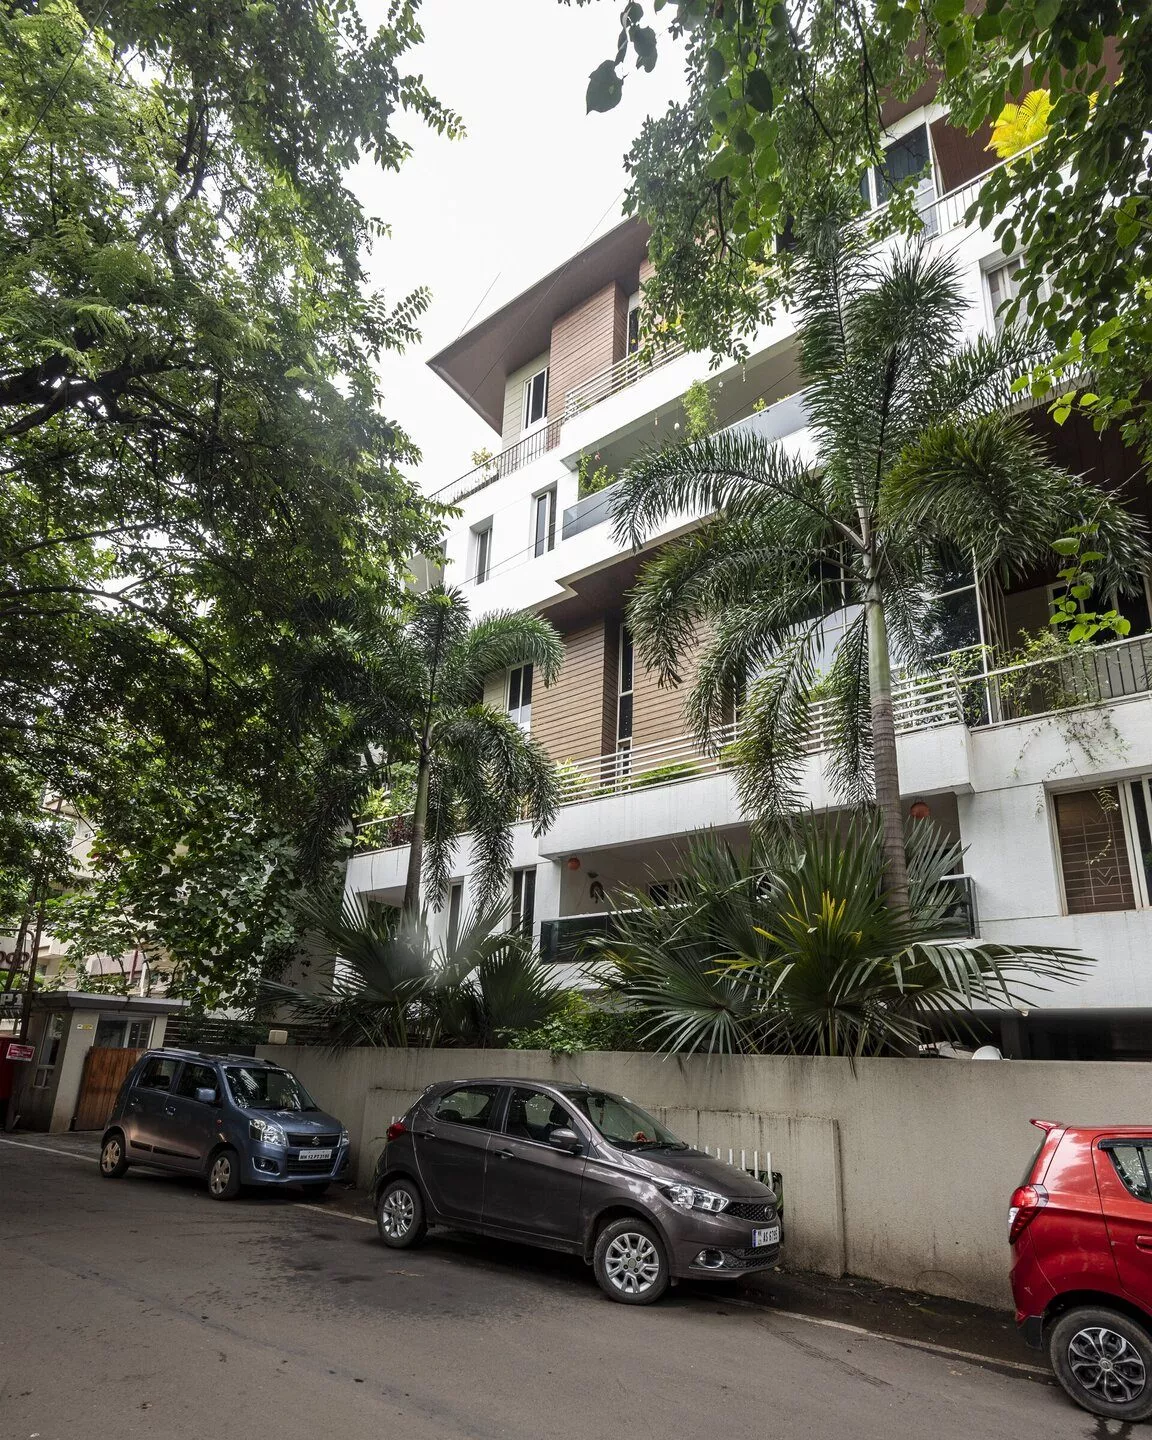 Luxury apartments in Pune | Saraswati Building| Spacious 4 BHK Homes